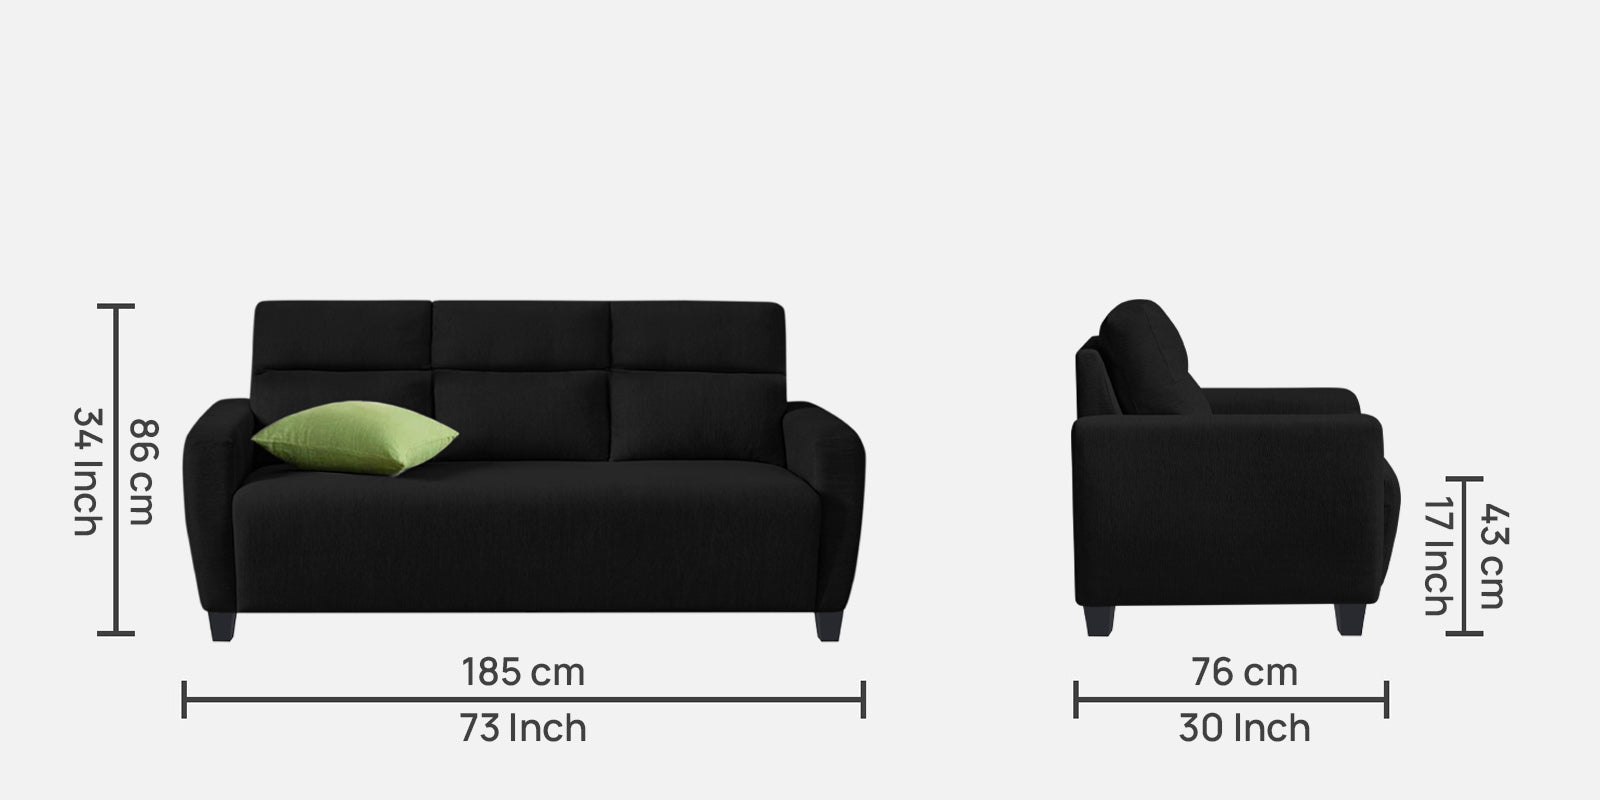 Bakadi Fabric 3 Seater Sofa in Zed Black Colour